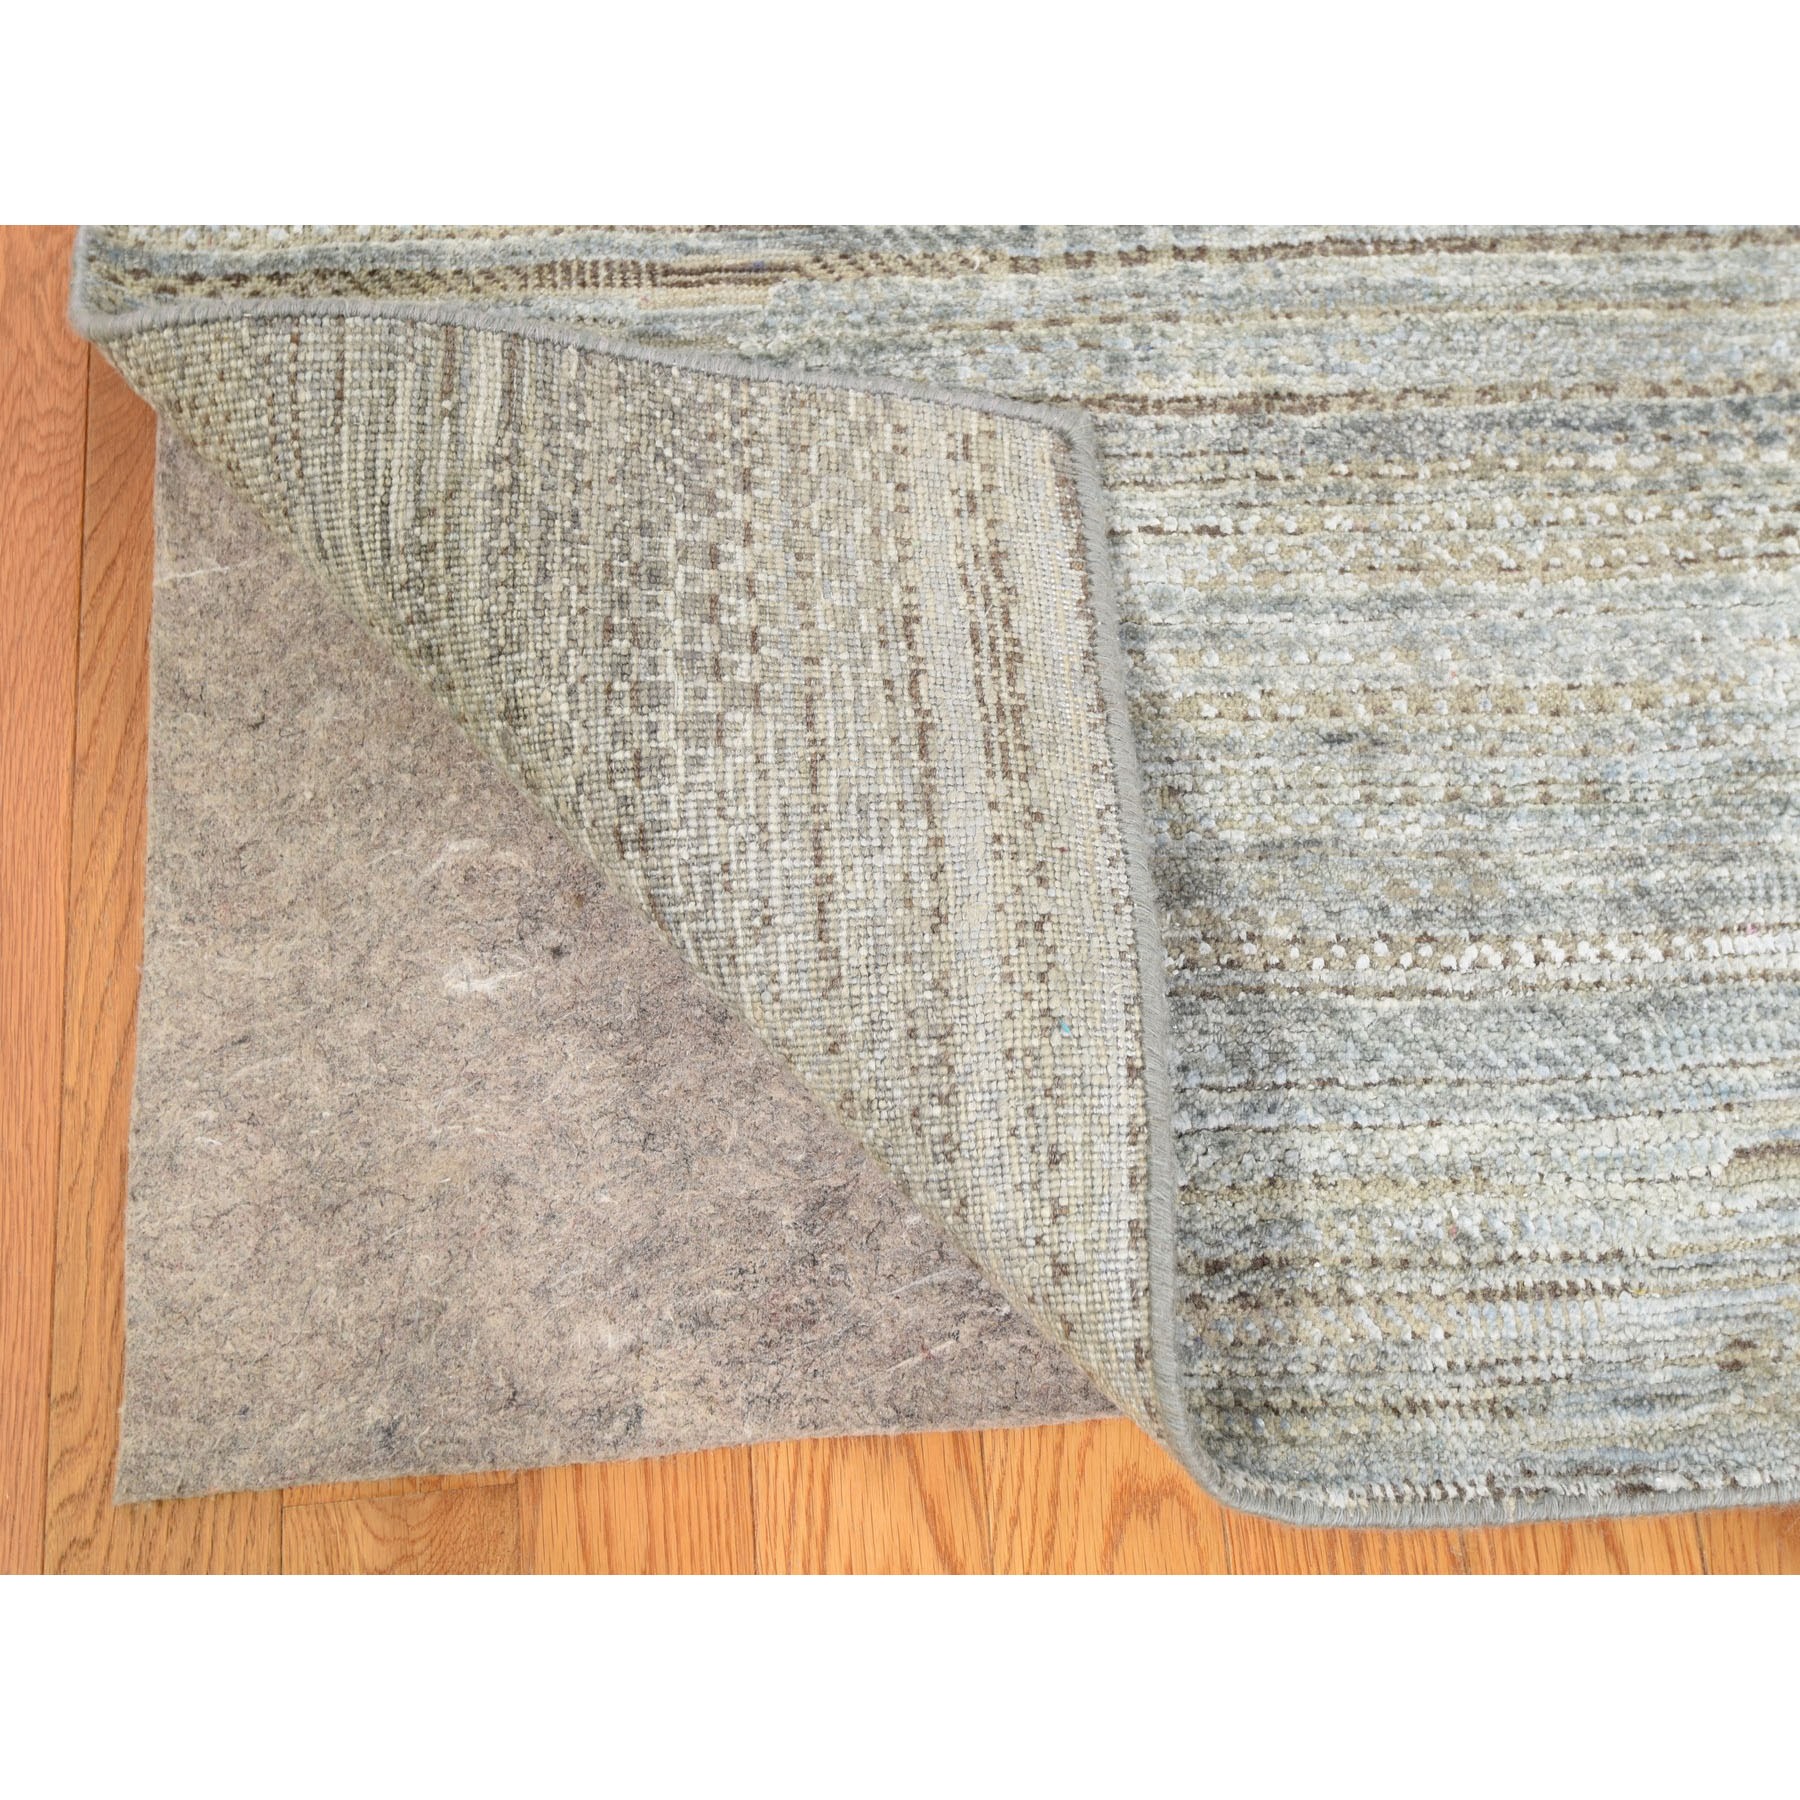 9'x12'2" Pure Silk With Textured Wool Grass Design Hand Woven Oriental Rug 